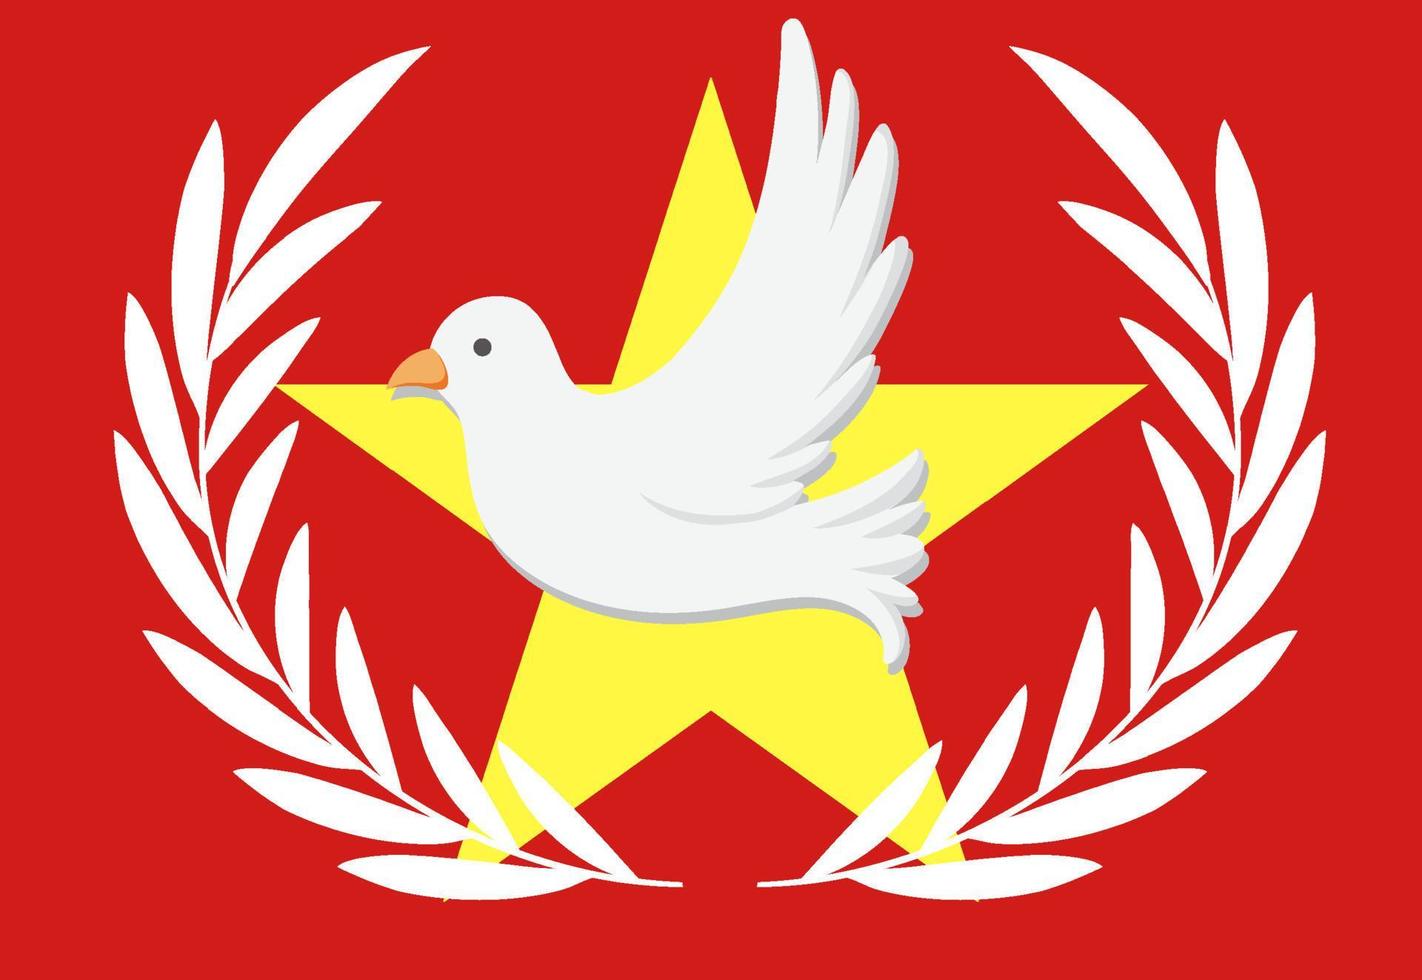 bandeira do vietnã com pomba branca vetor